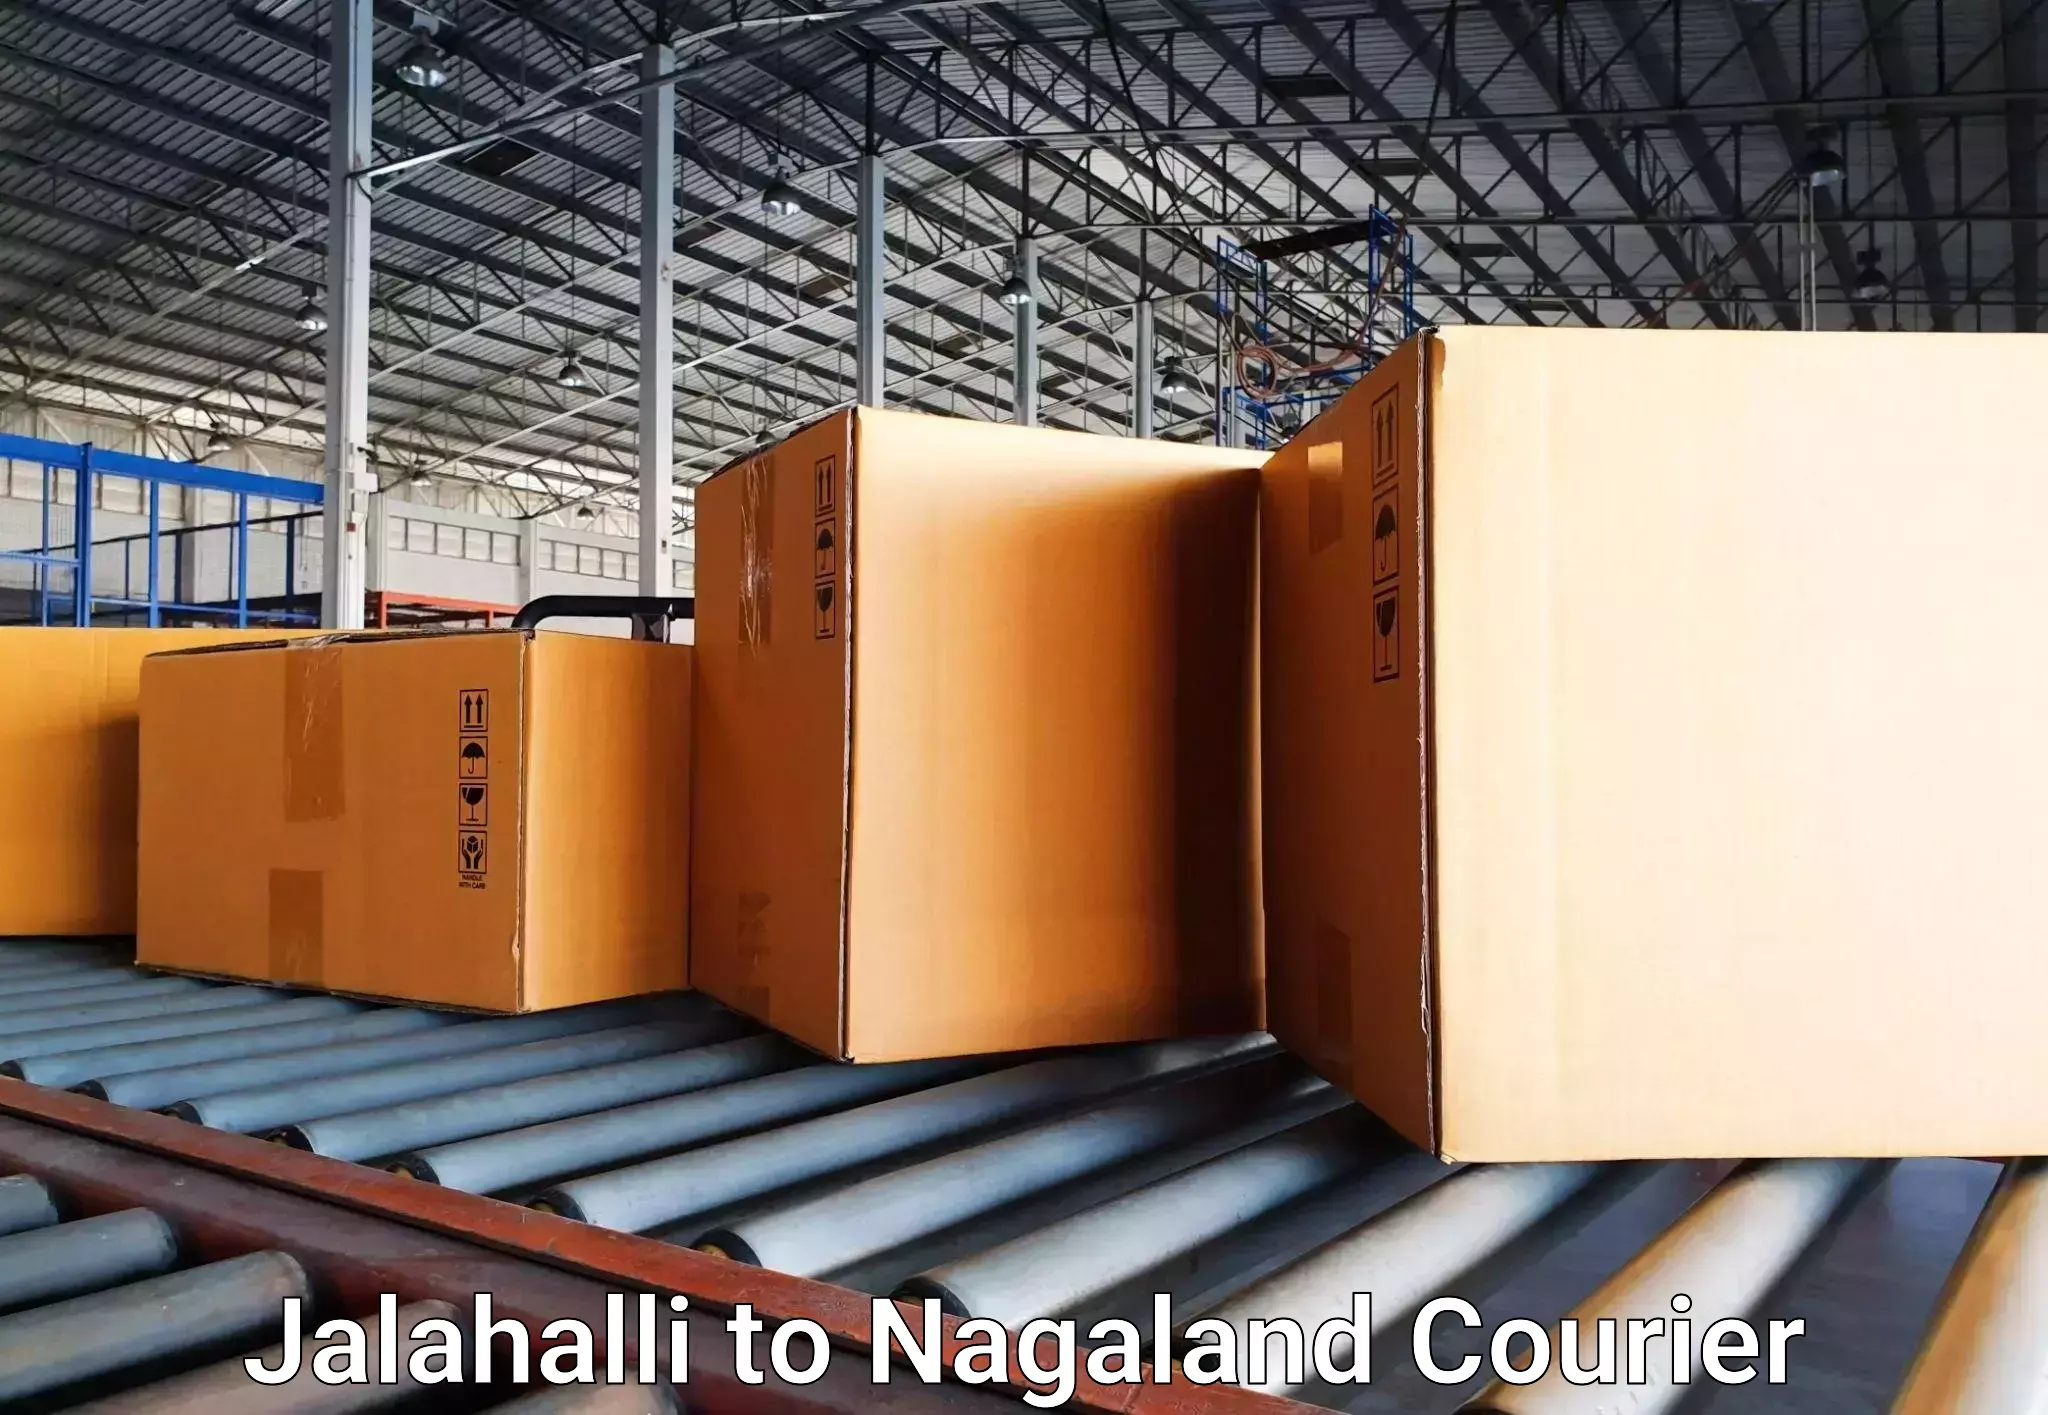 Luggage delivery app Jalahalli to Nagaland